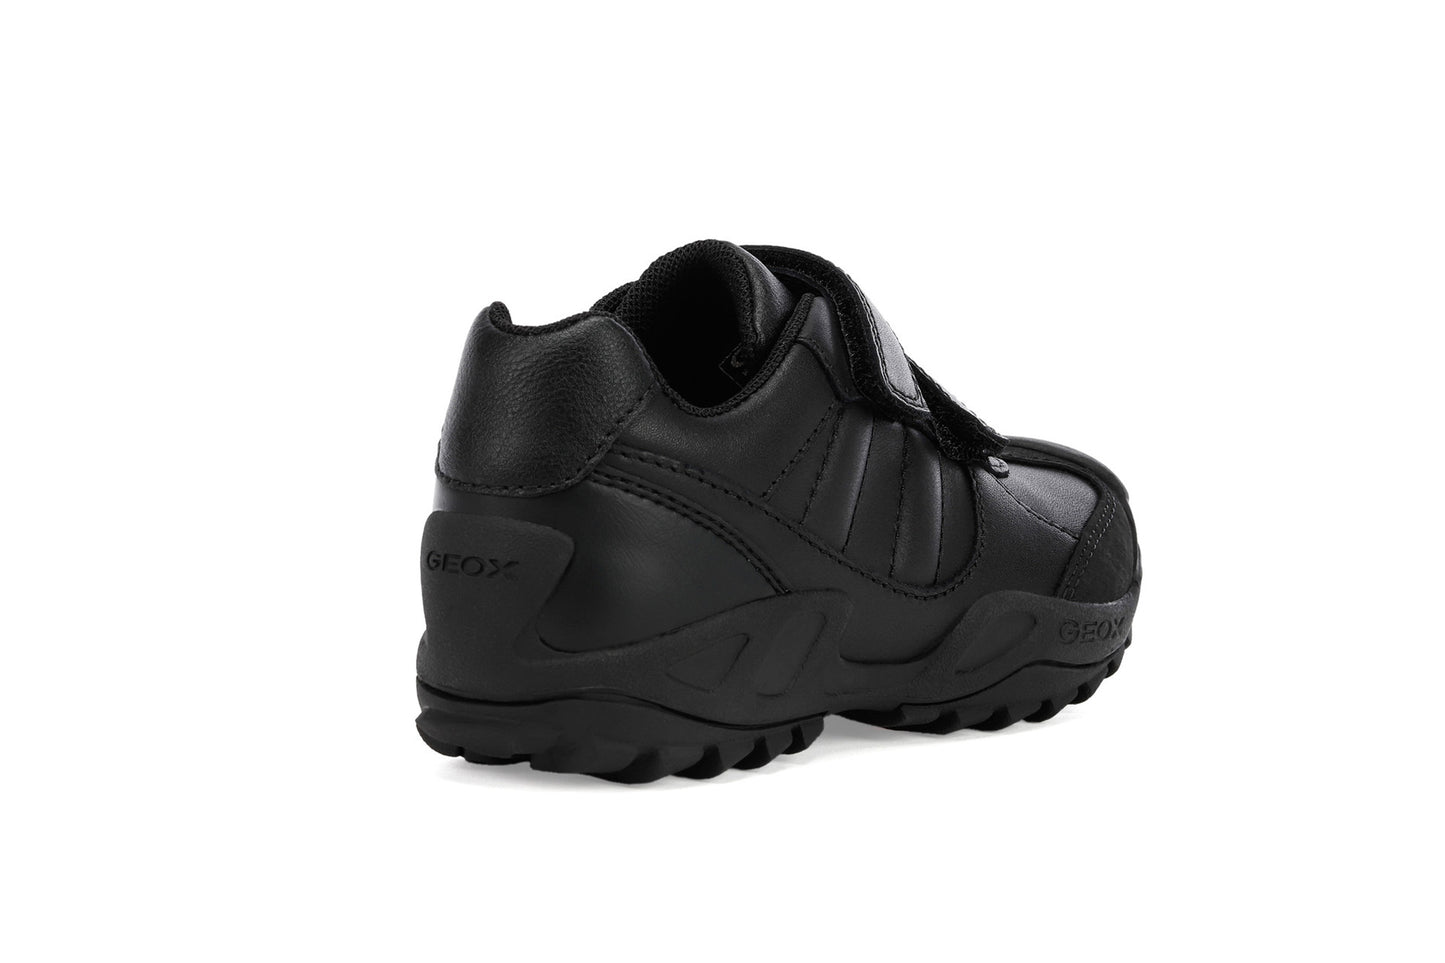 New Savage B Black Leather Boys School Shoe